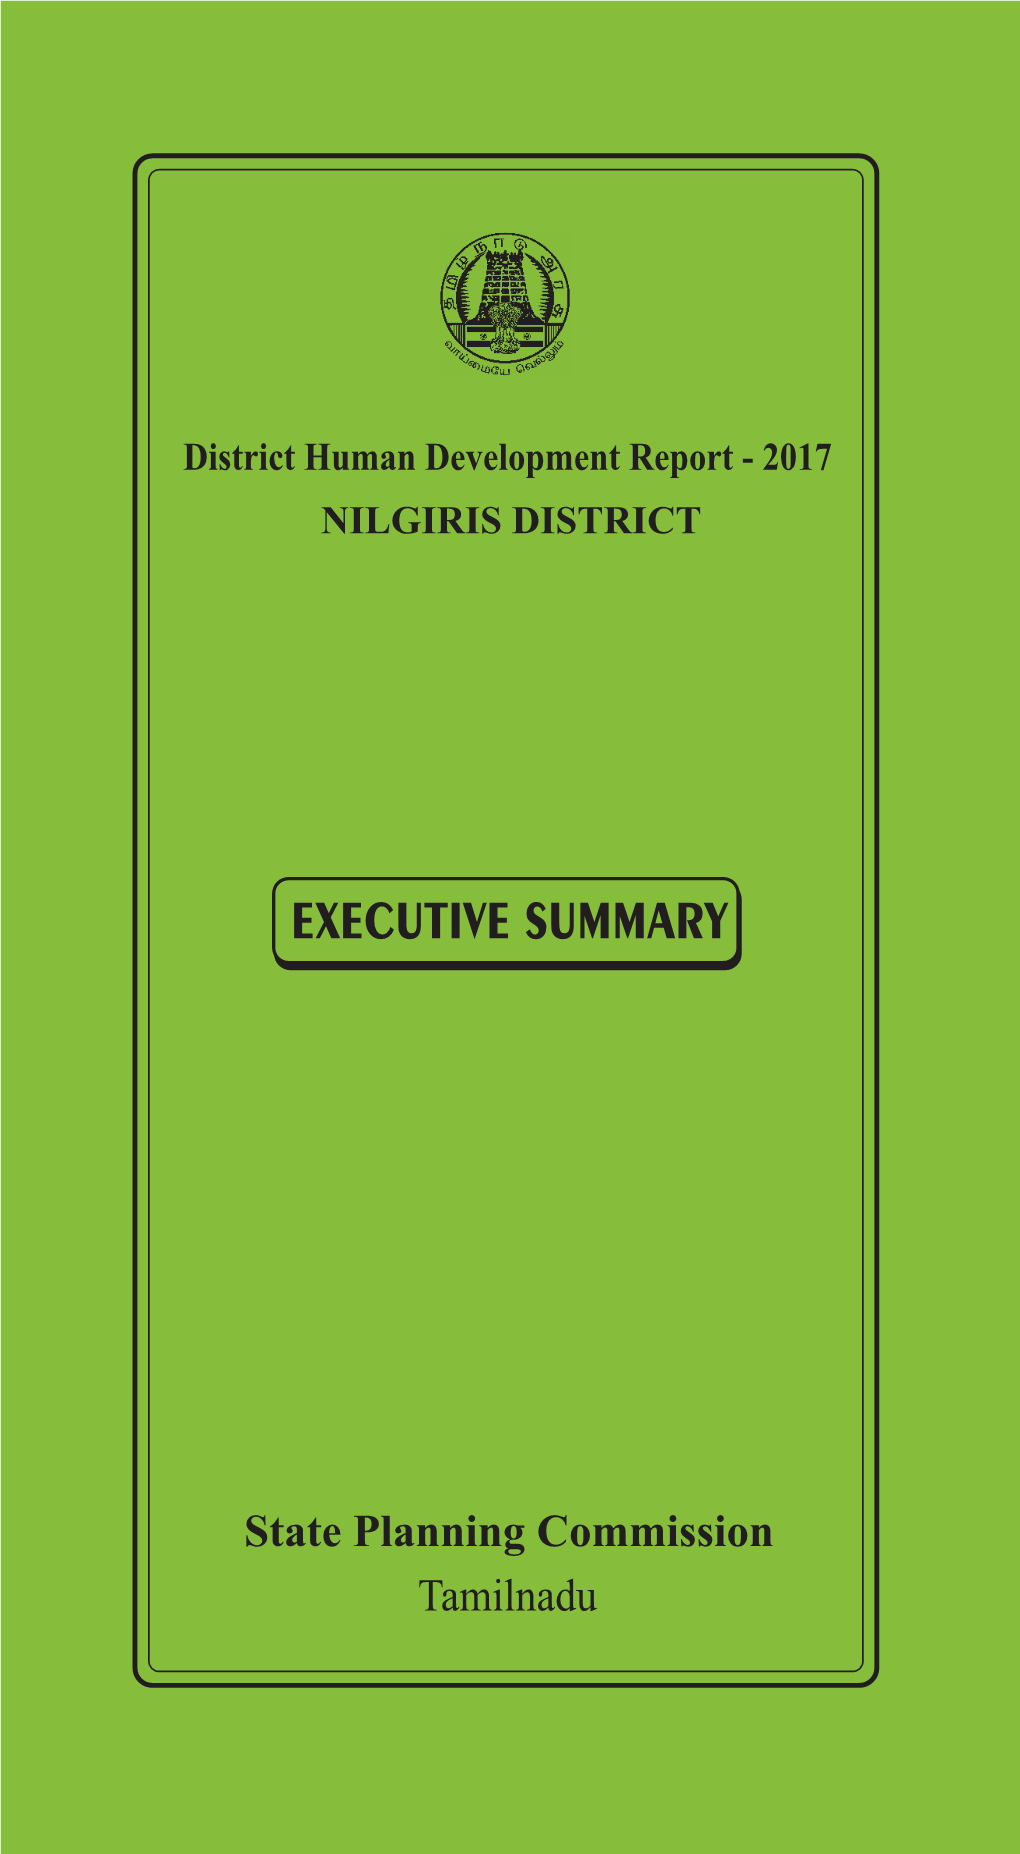 Executive Summary Book the Nilgiris.Pmd